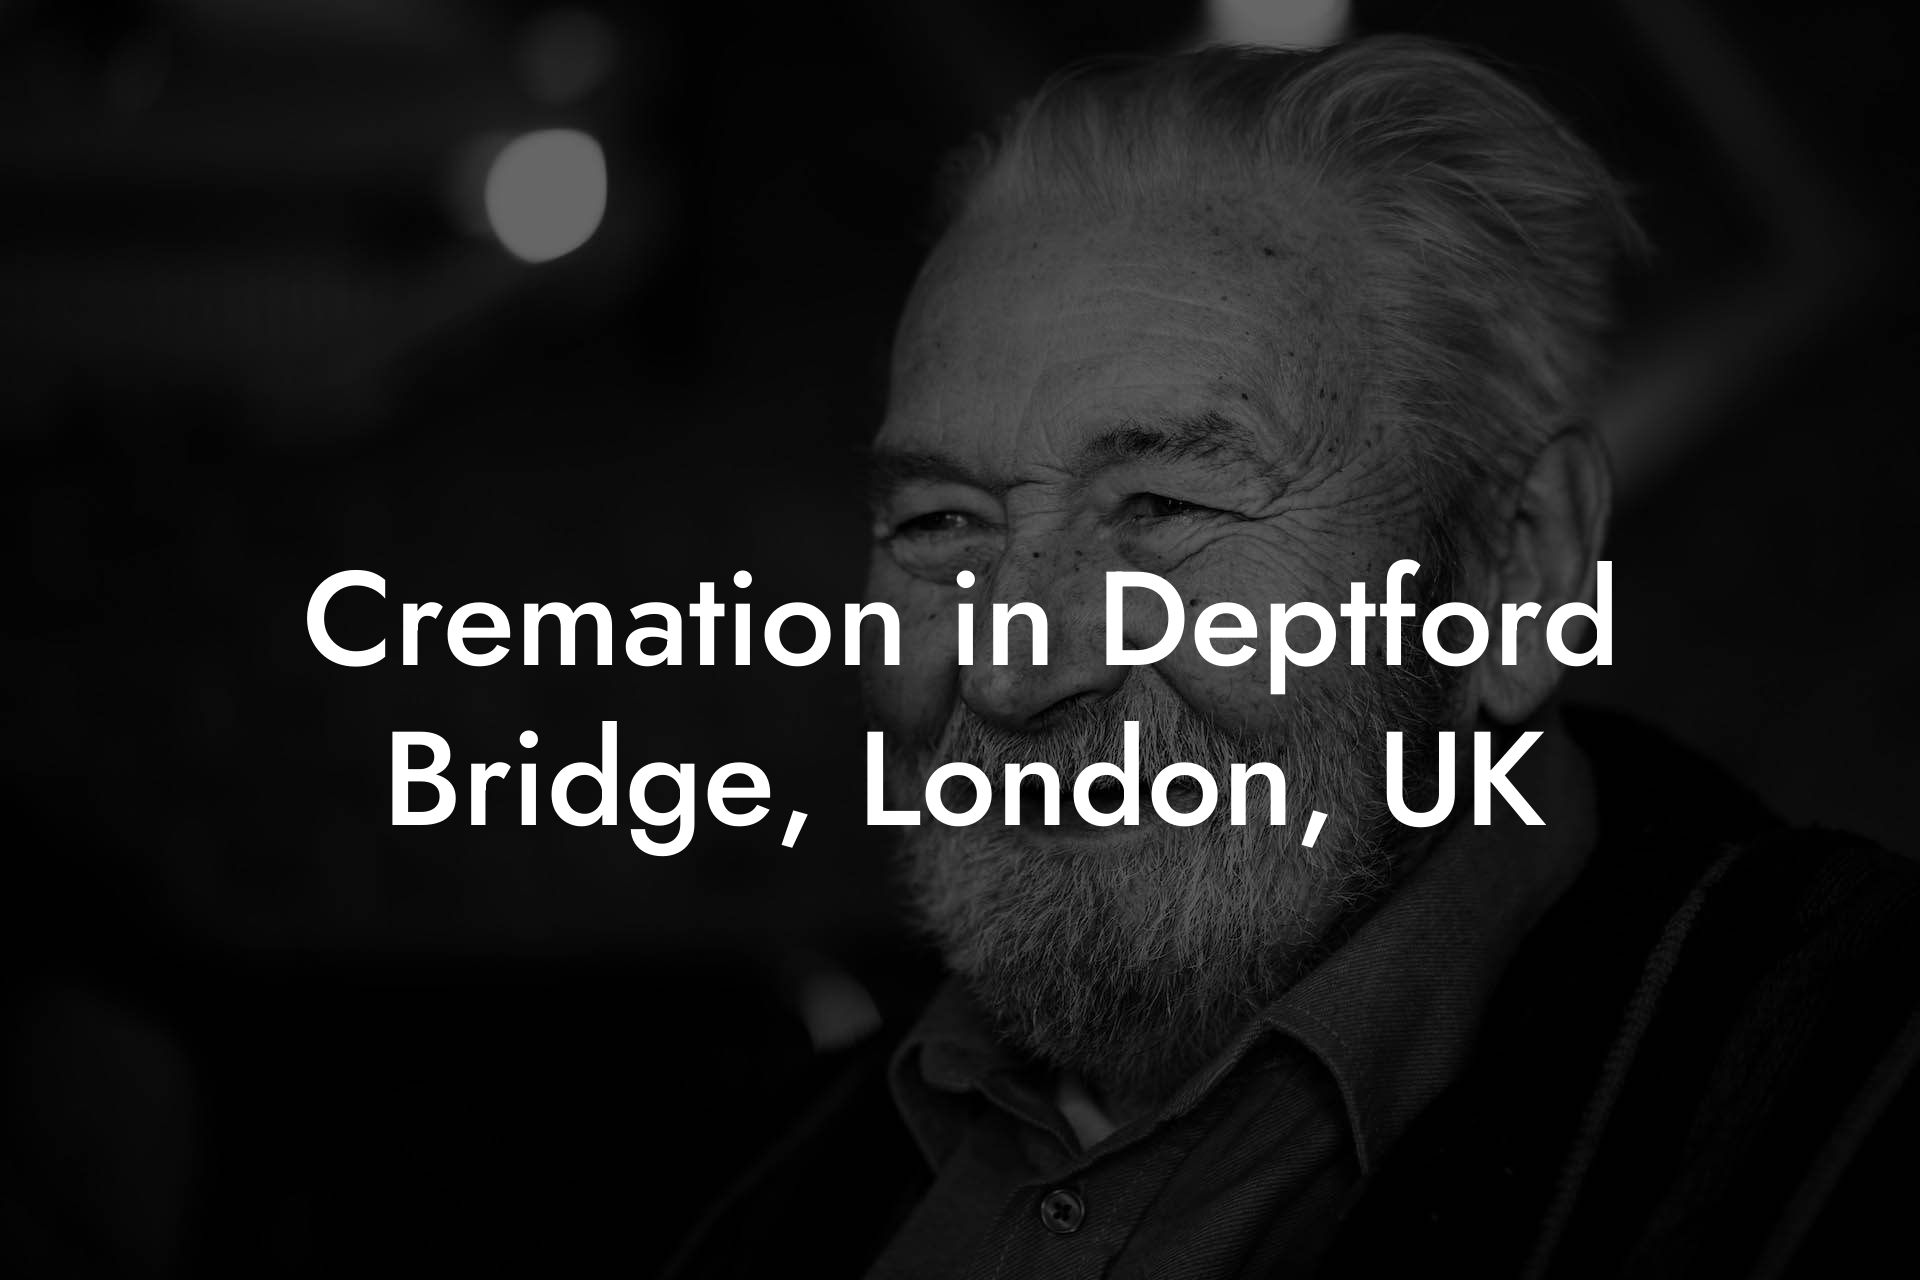 Cremation in Deptford Bridge, London, UK